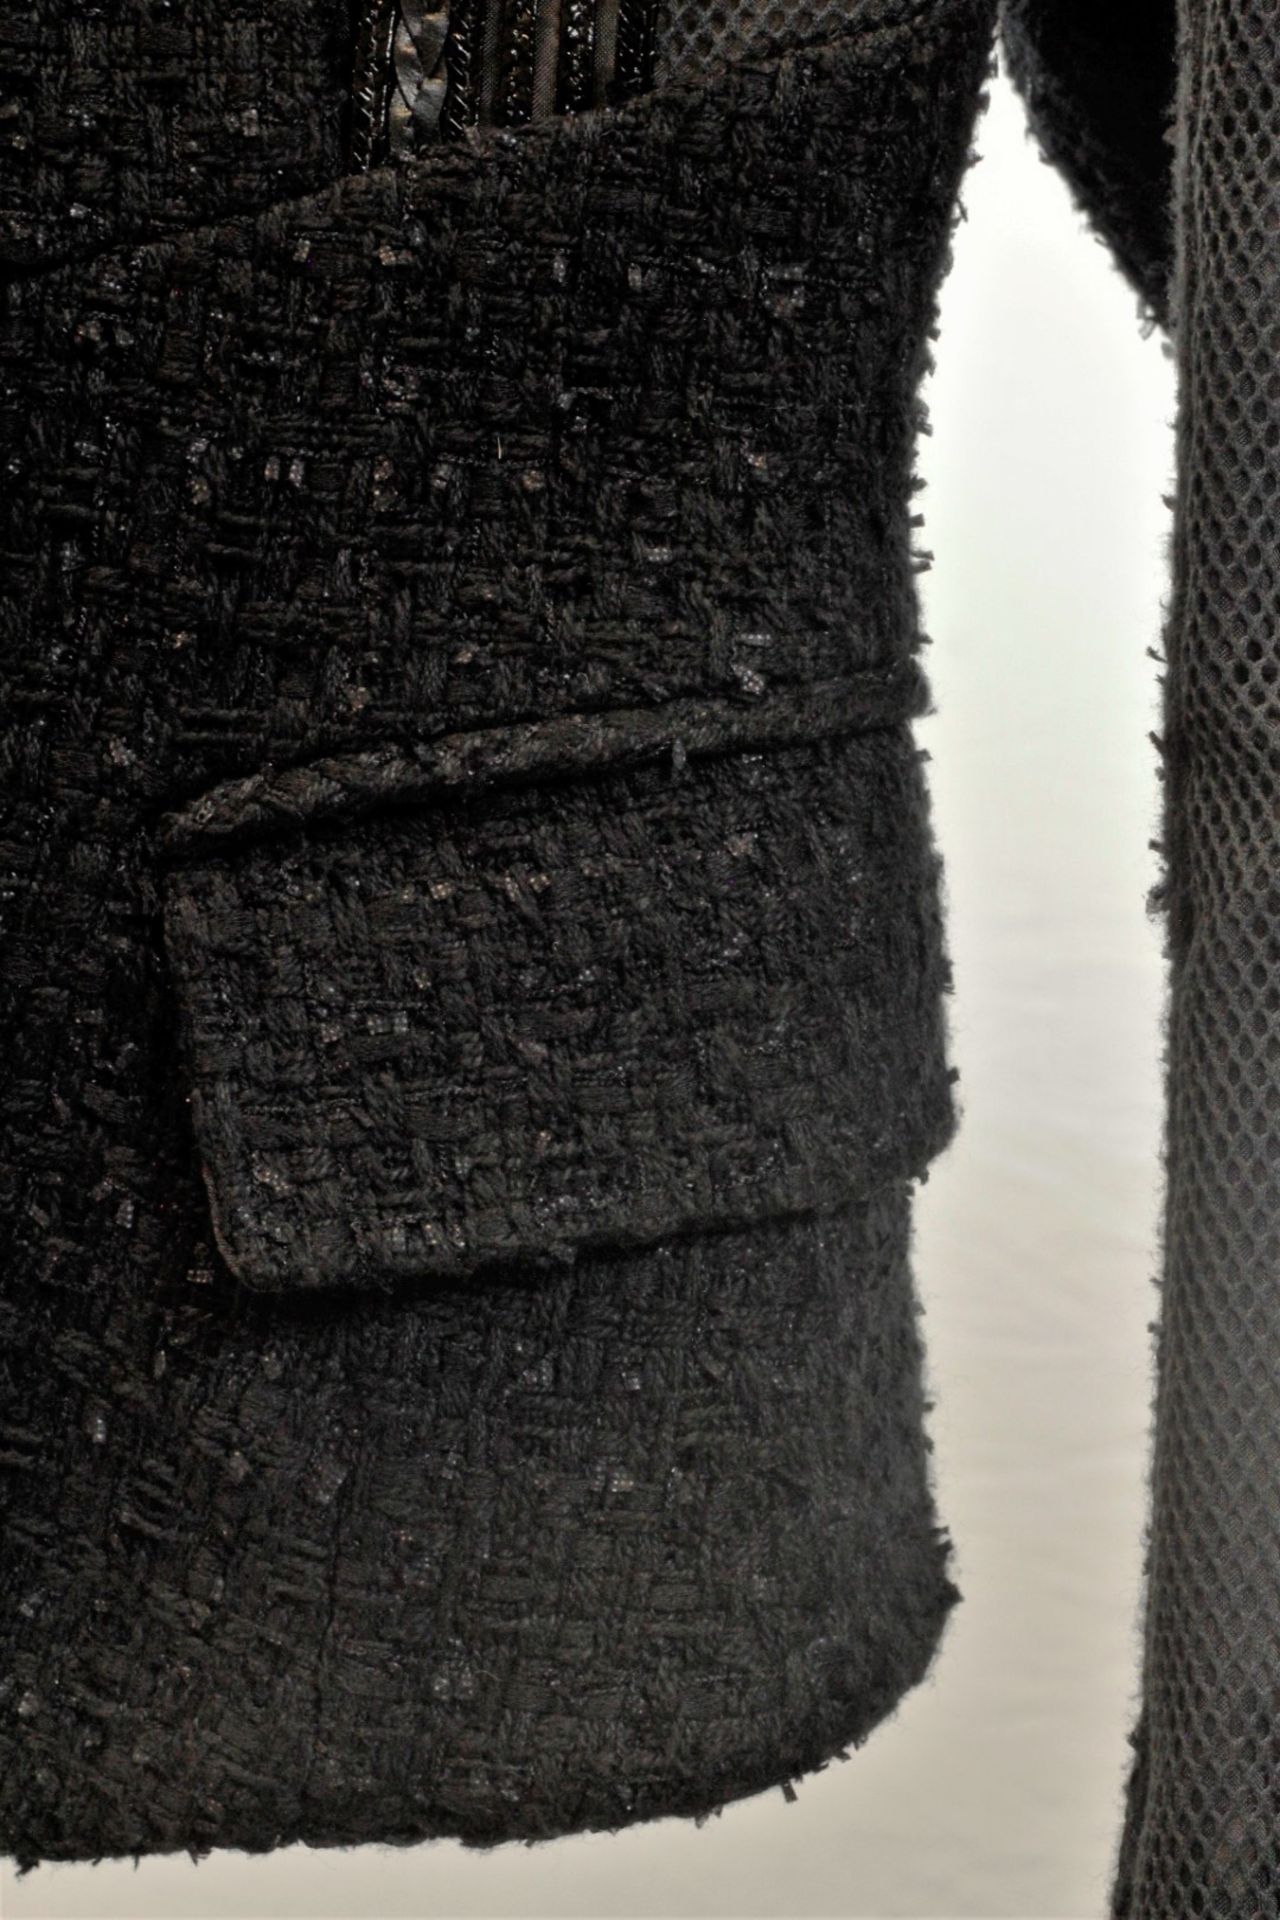 1 x Balmain Black Jacket - Size: 14 - Material: Body 48% Cotton, 27% Acrylic, 19% Nylon, 6% Viscose. - Image 6 of 18